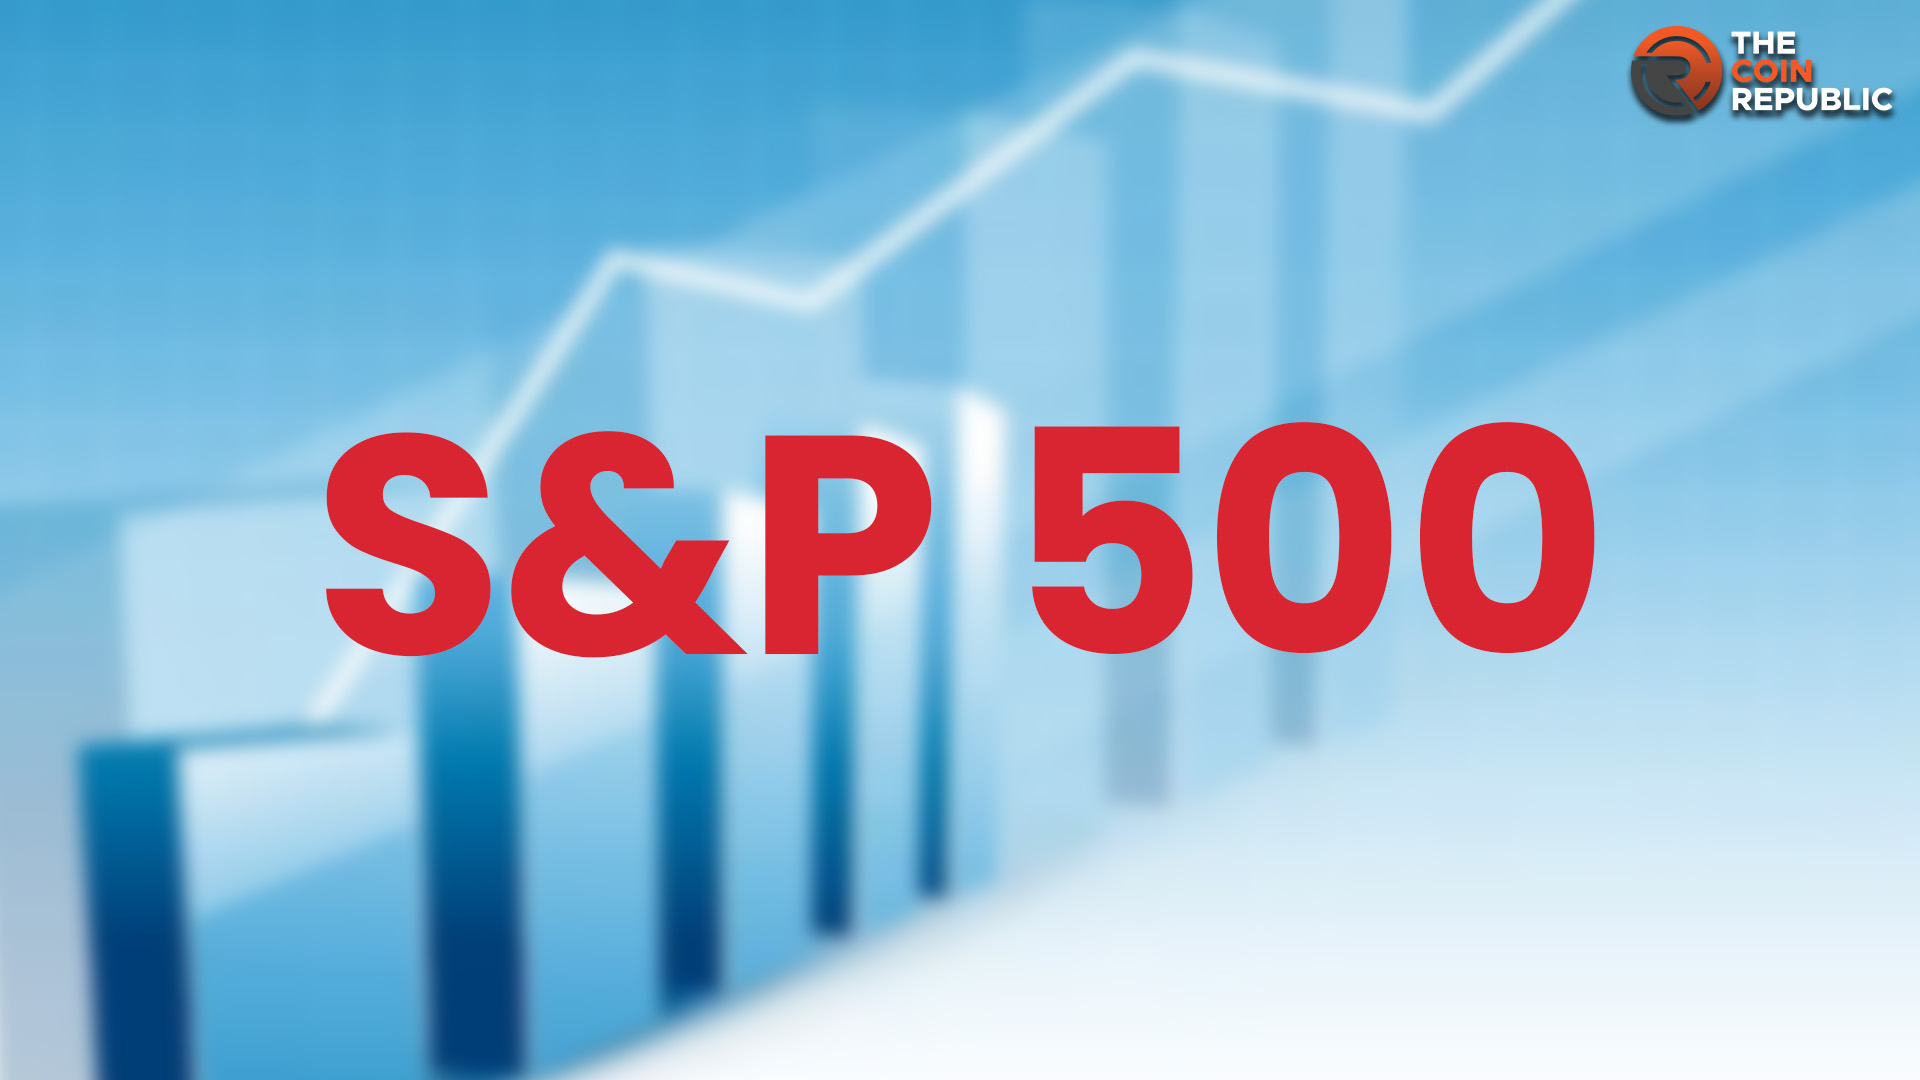 Michael Burry Bear vs S&P 500 Bull; Will it be a Next Big Short?